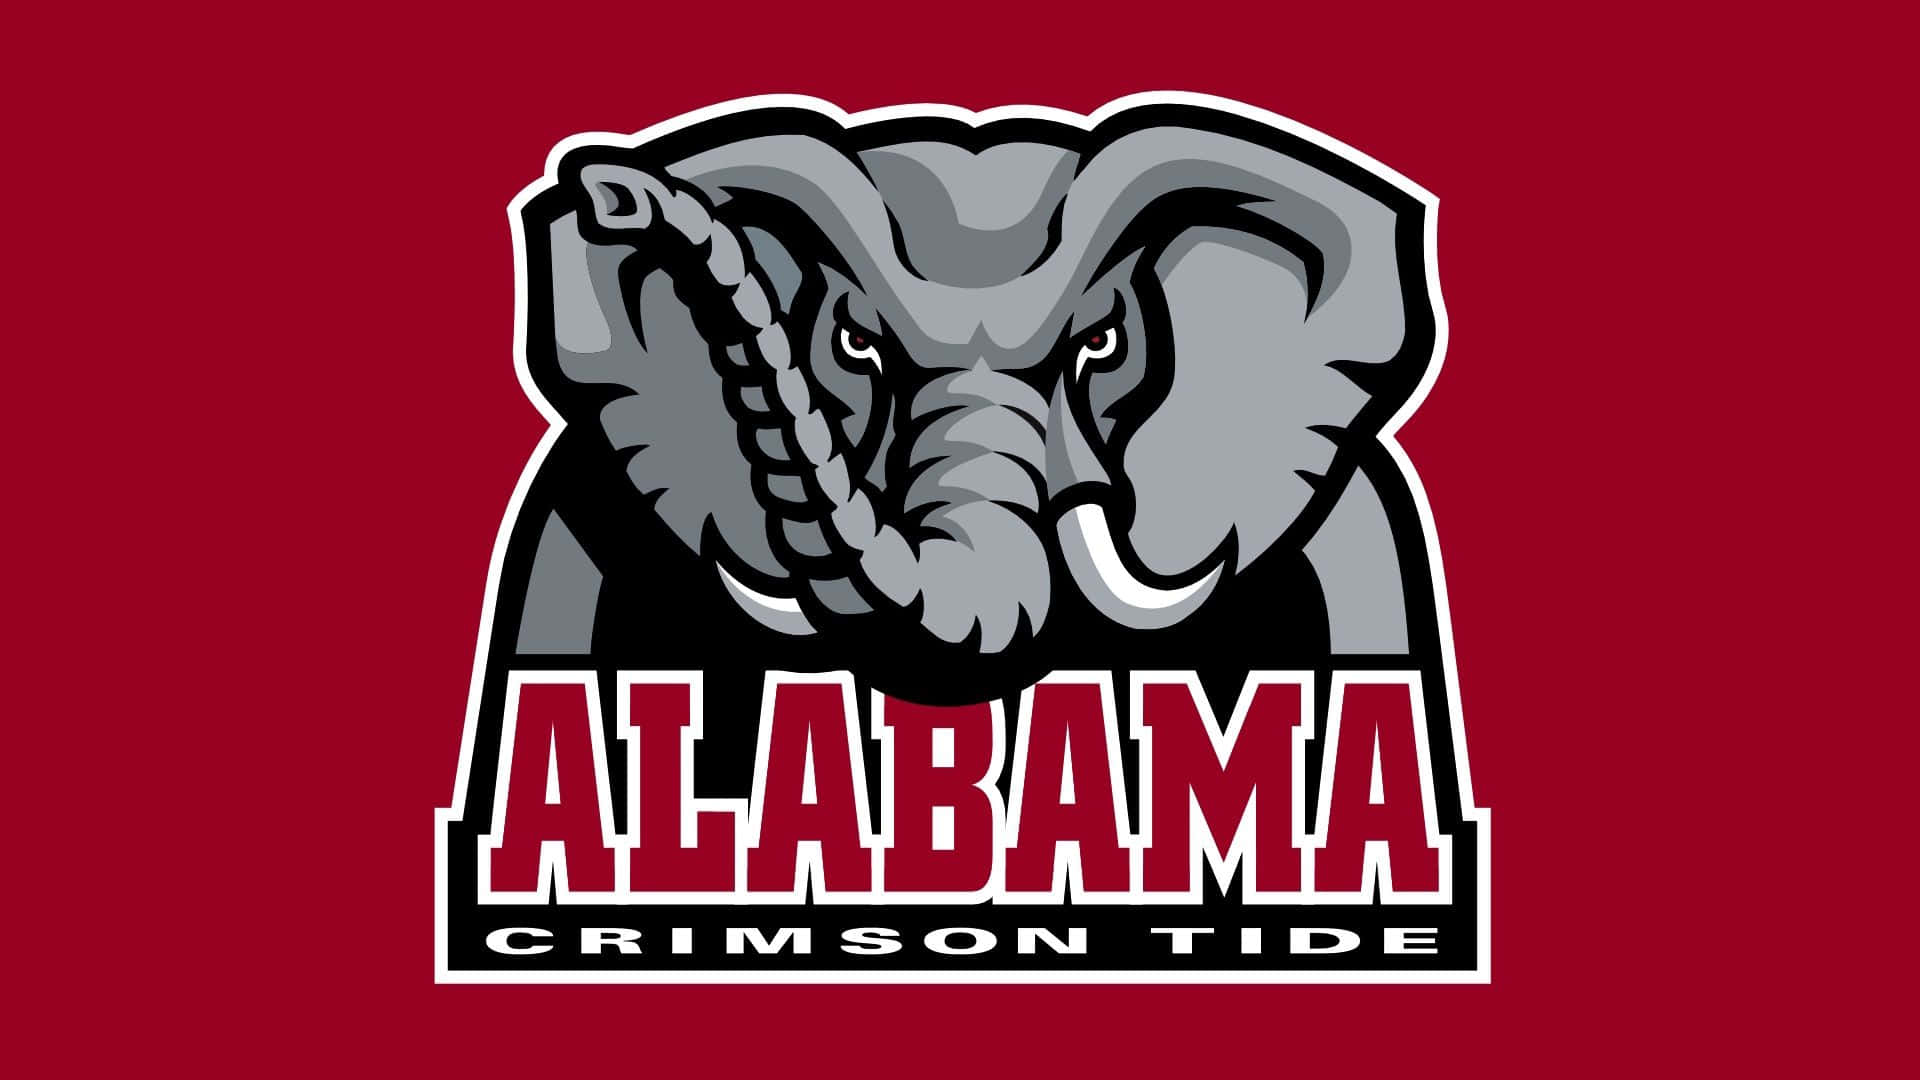 Creative Alabama Football Team Mascot Digital Art